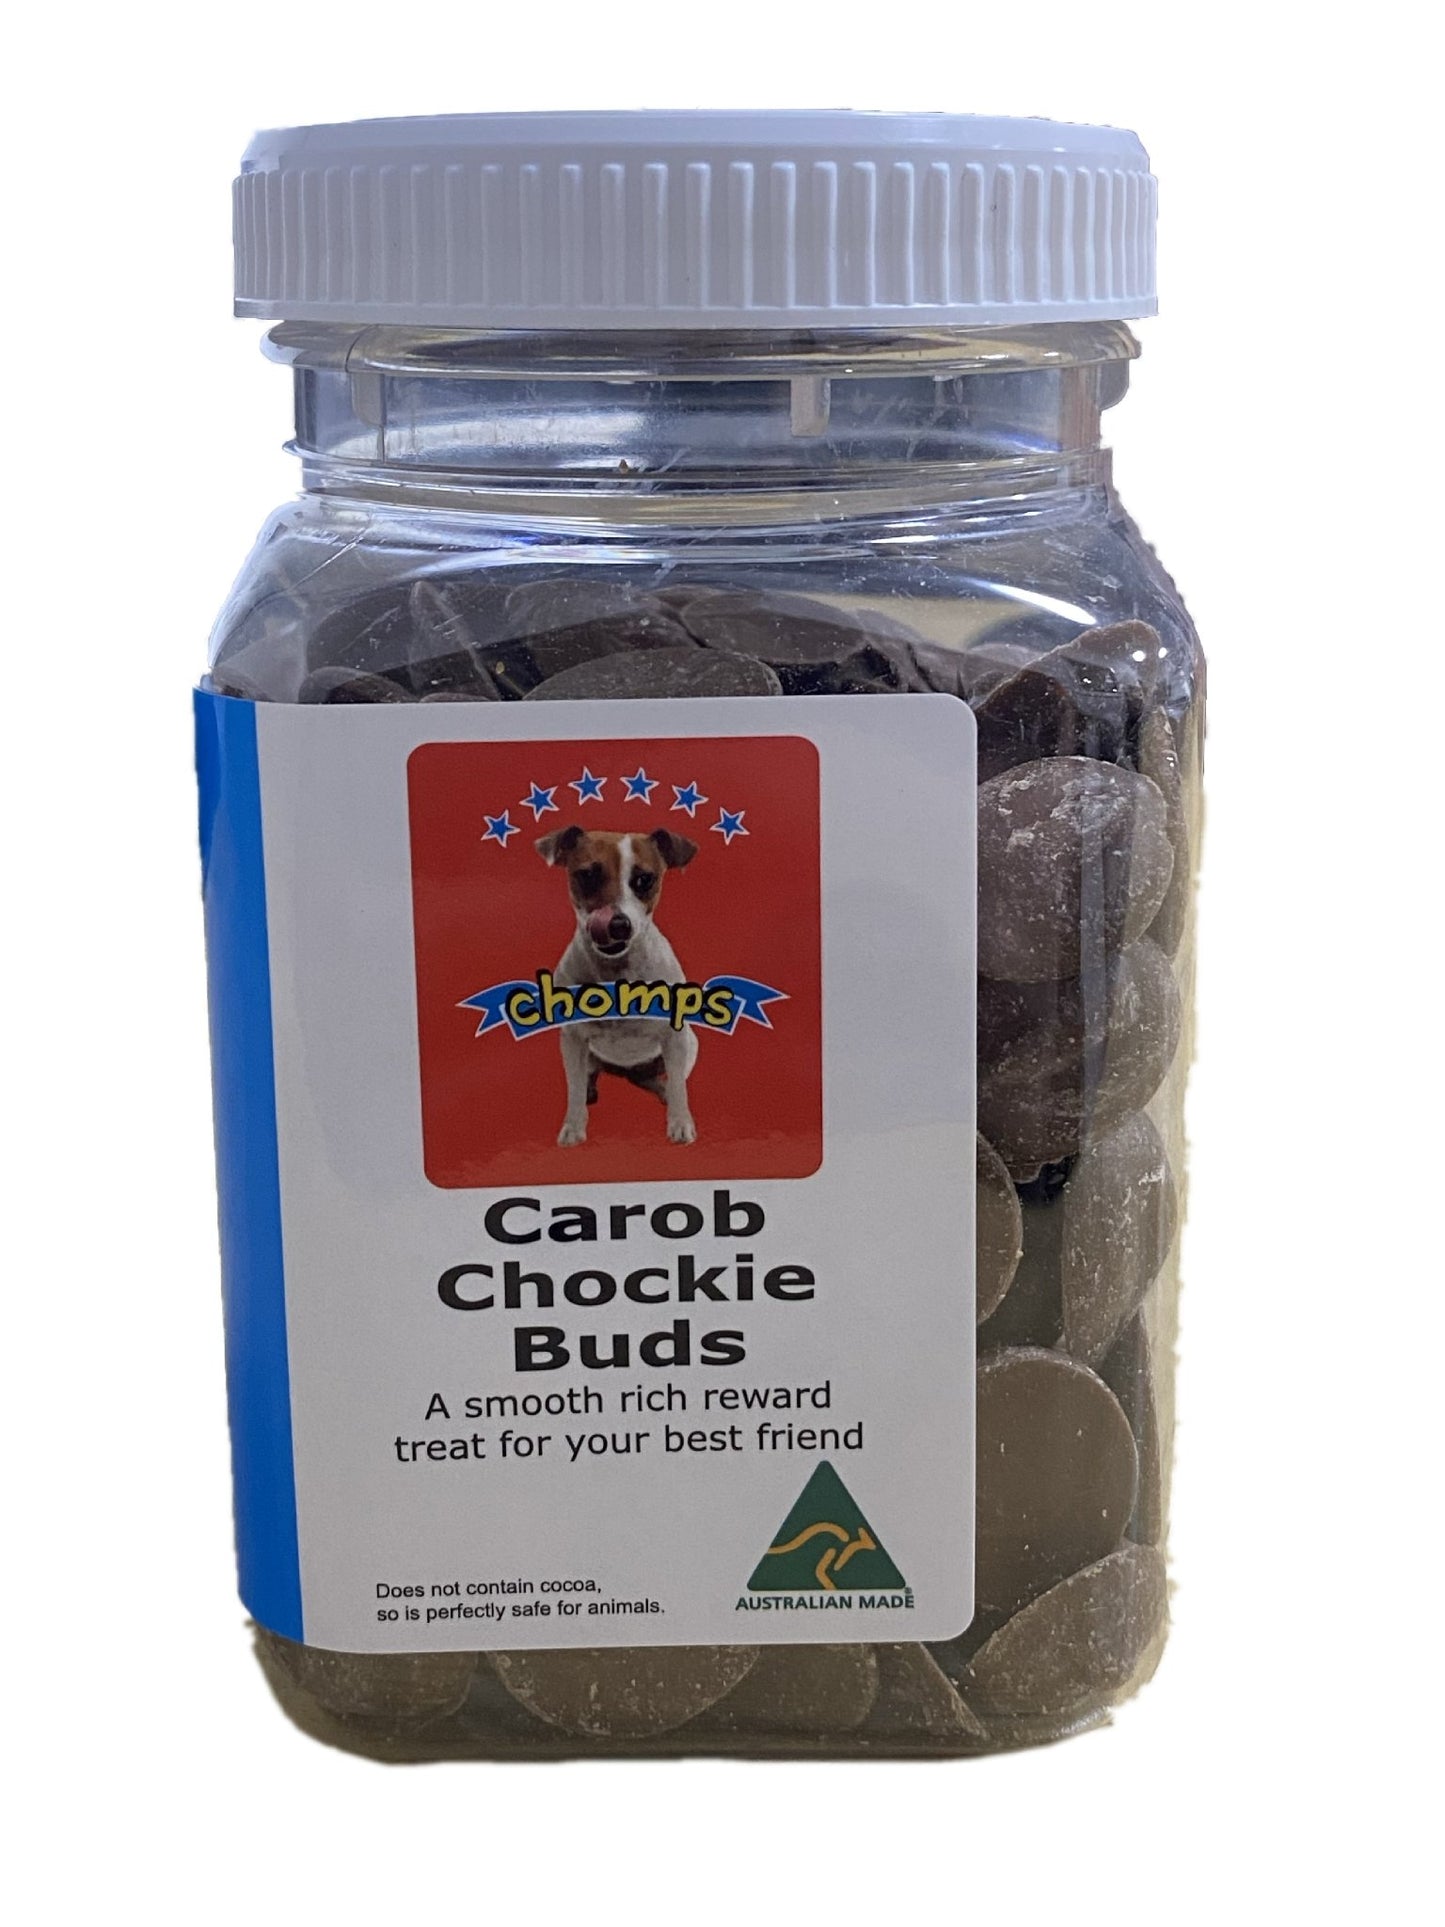 Carob Chockie Buds 225g K9 - Woonona Petfood & Produce